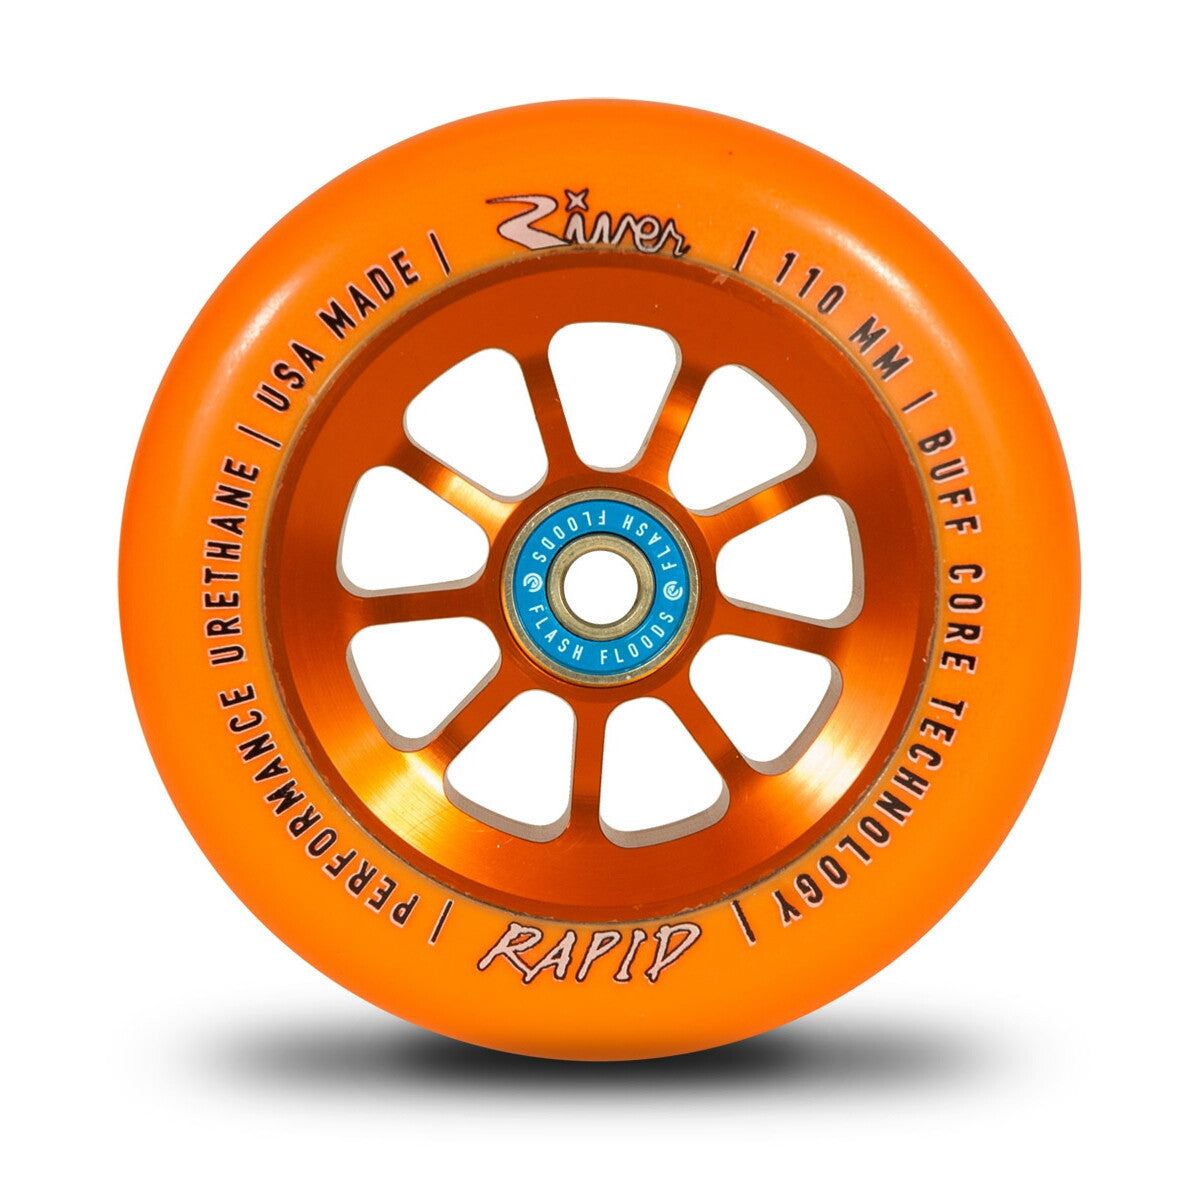 River Wheel Co. Rapid Orange on Orange 110mm wheels